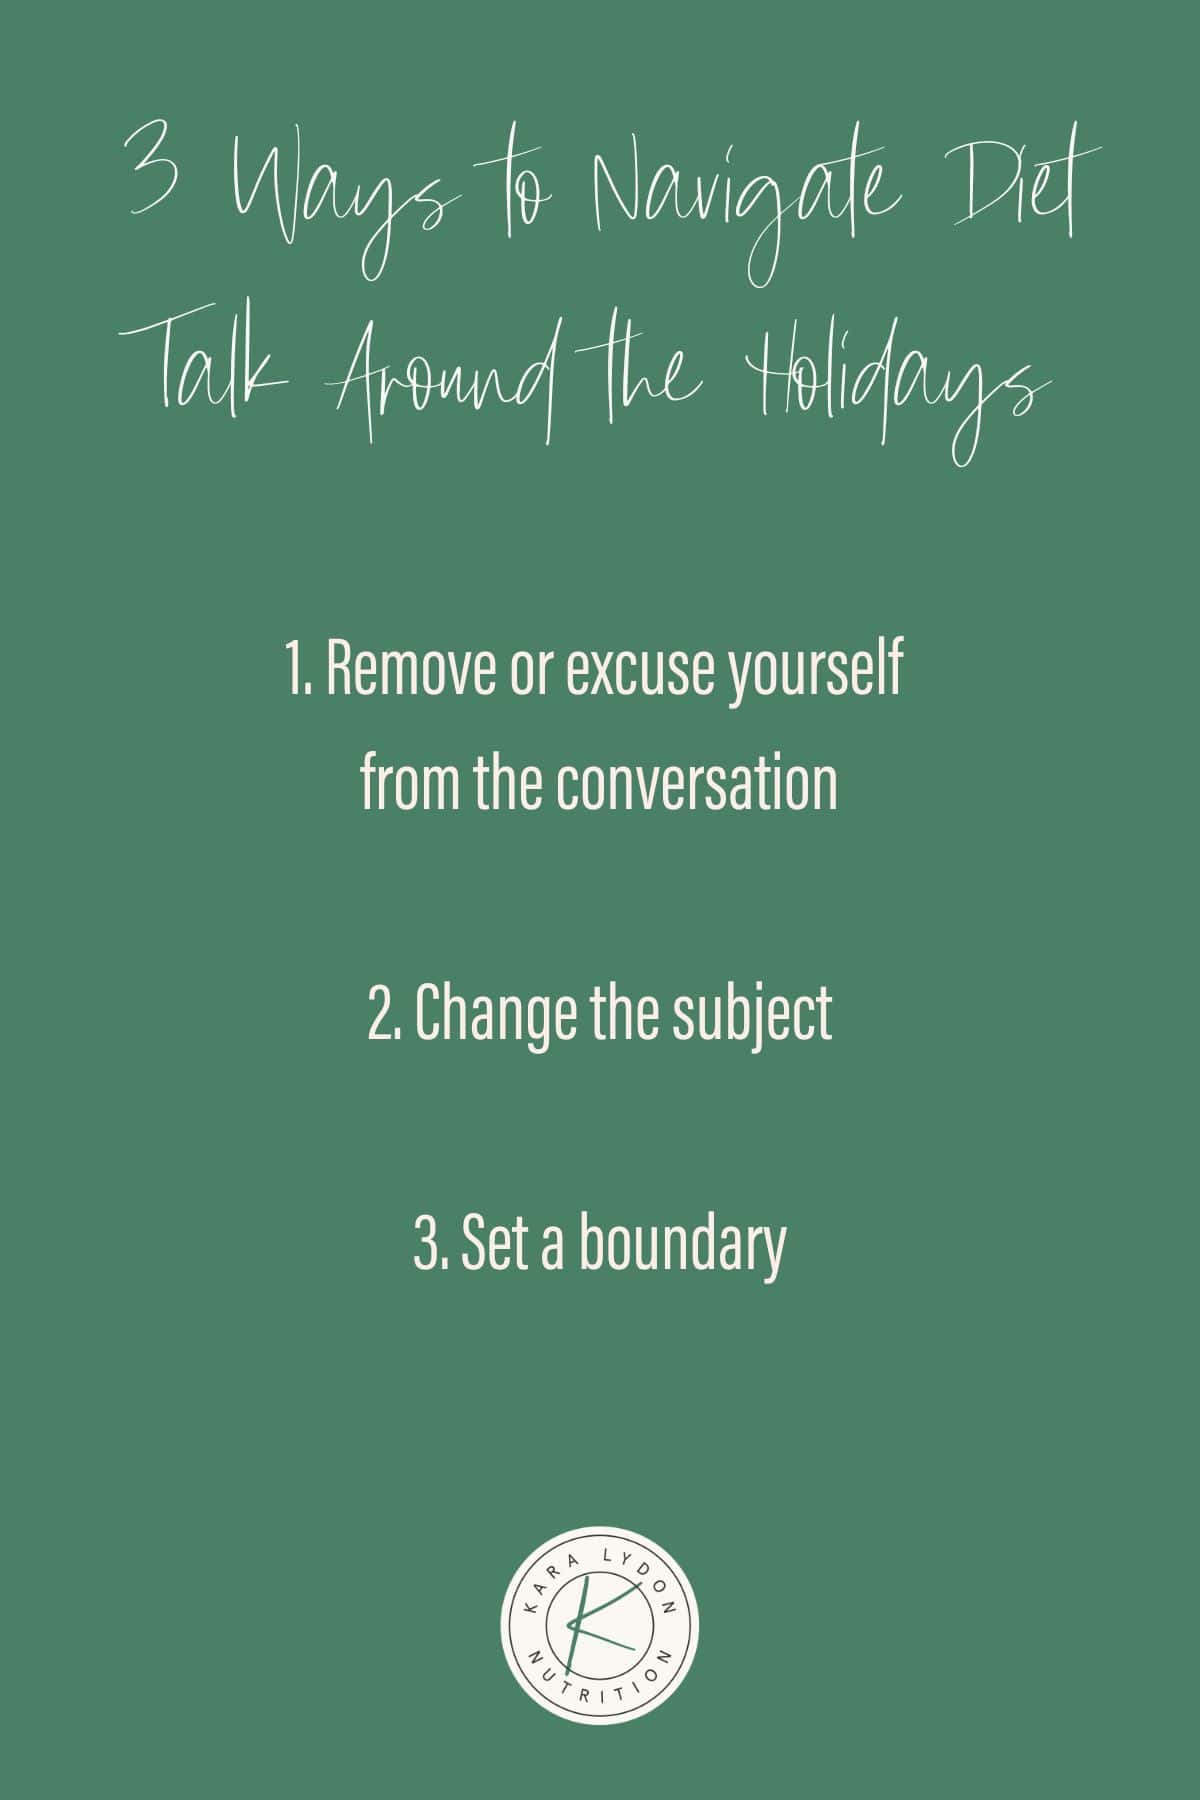 Graphic listing 3 ways to navigate diet talk around the holidays